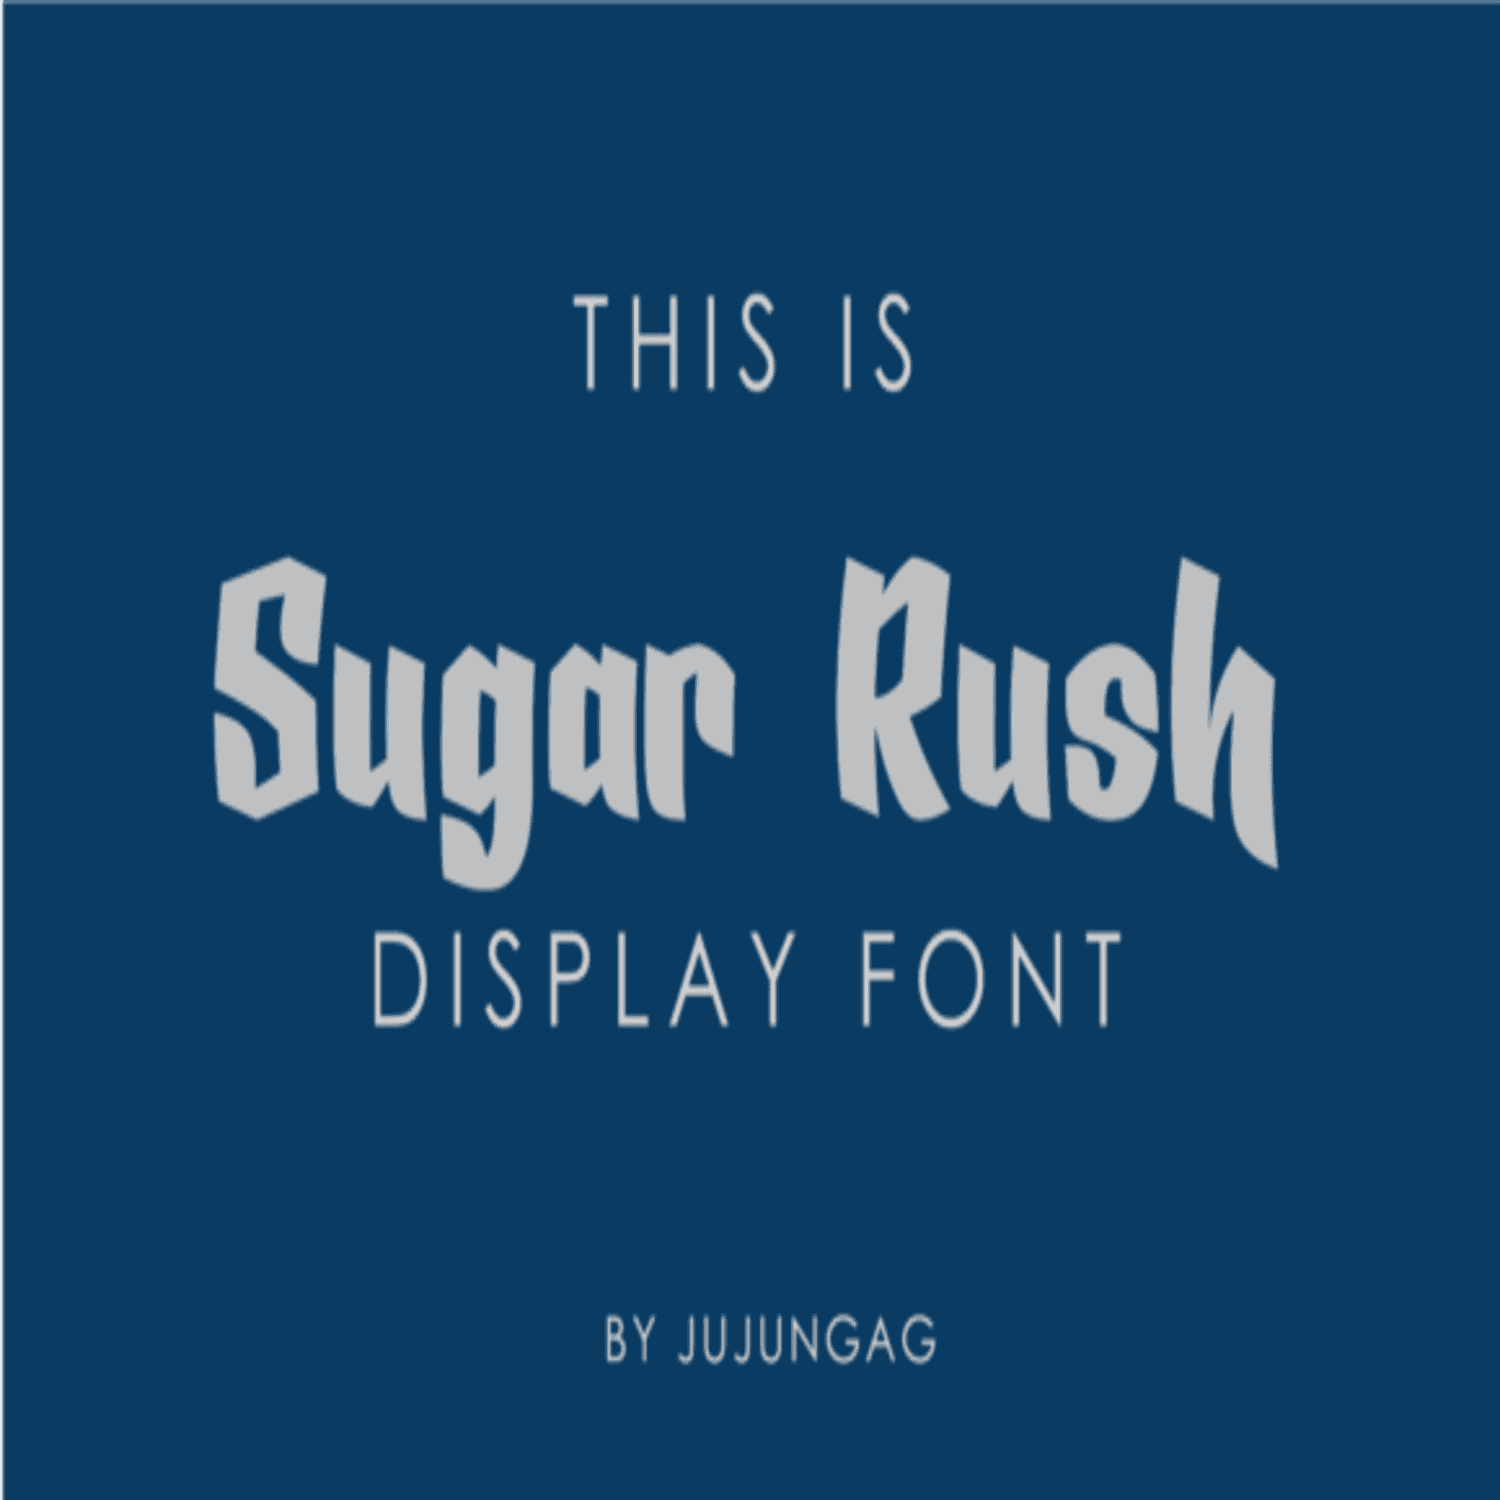 Sugar Rush Fonts main cover.